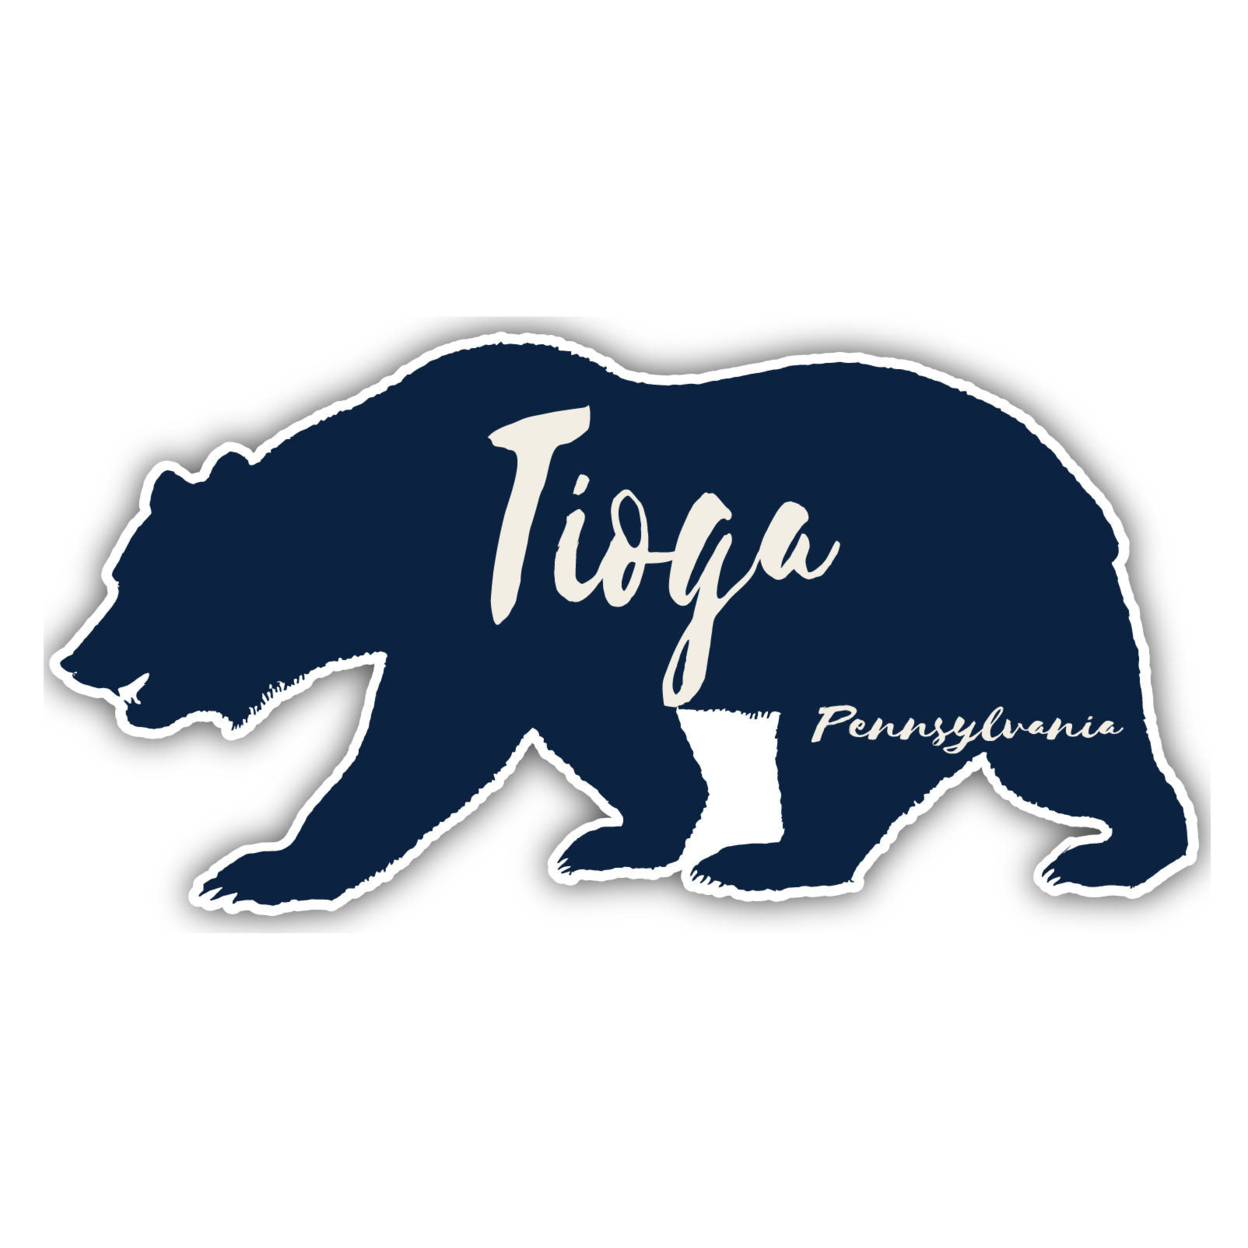 Tioga Pennsylvania Souvenir Decorative Stickers (Choose Theme And Size) - Single Unit, 2-Inch, Great Outdoors